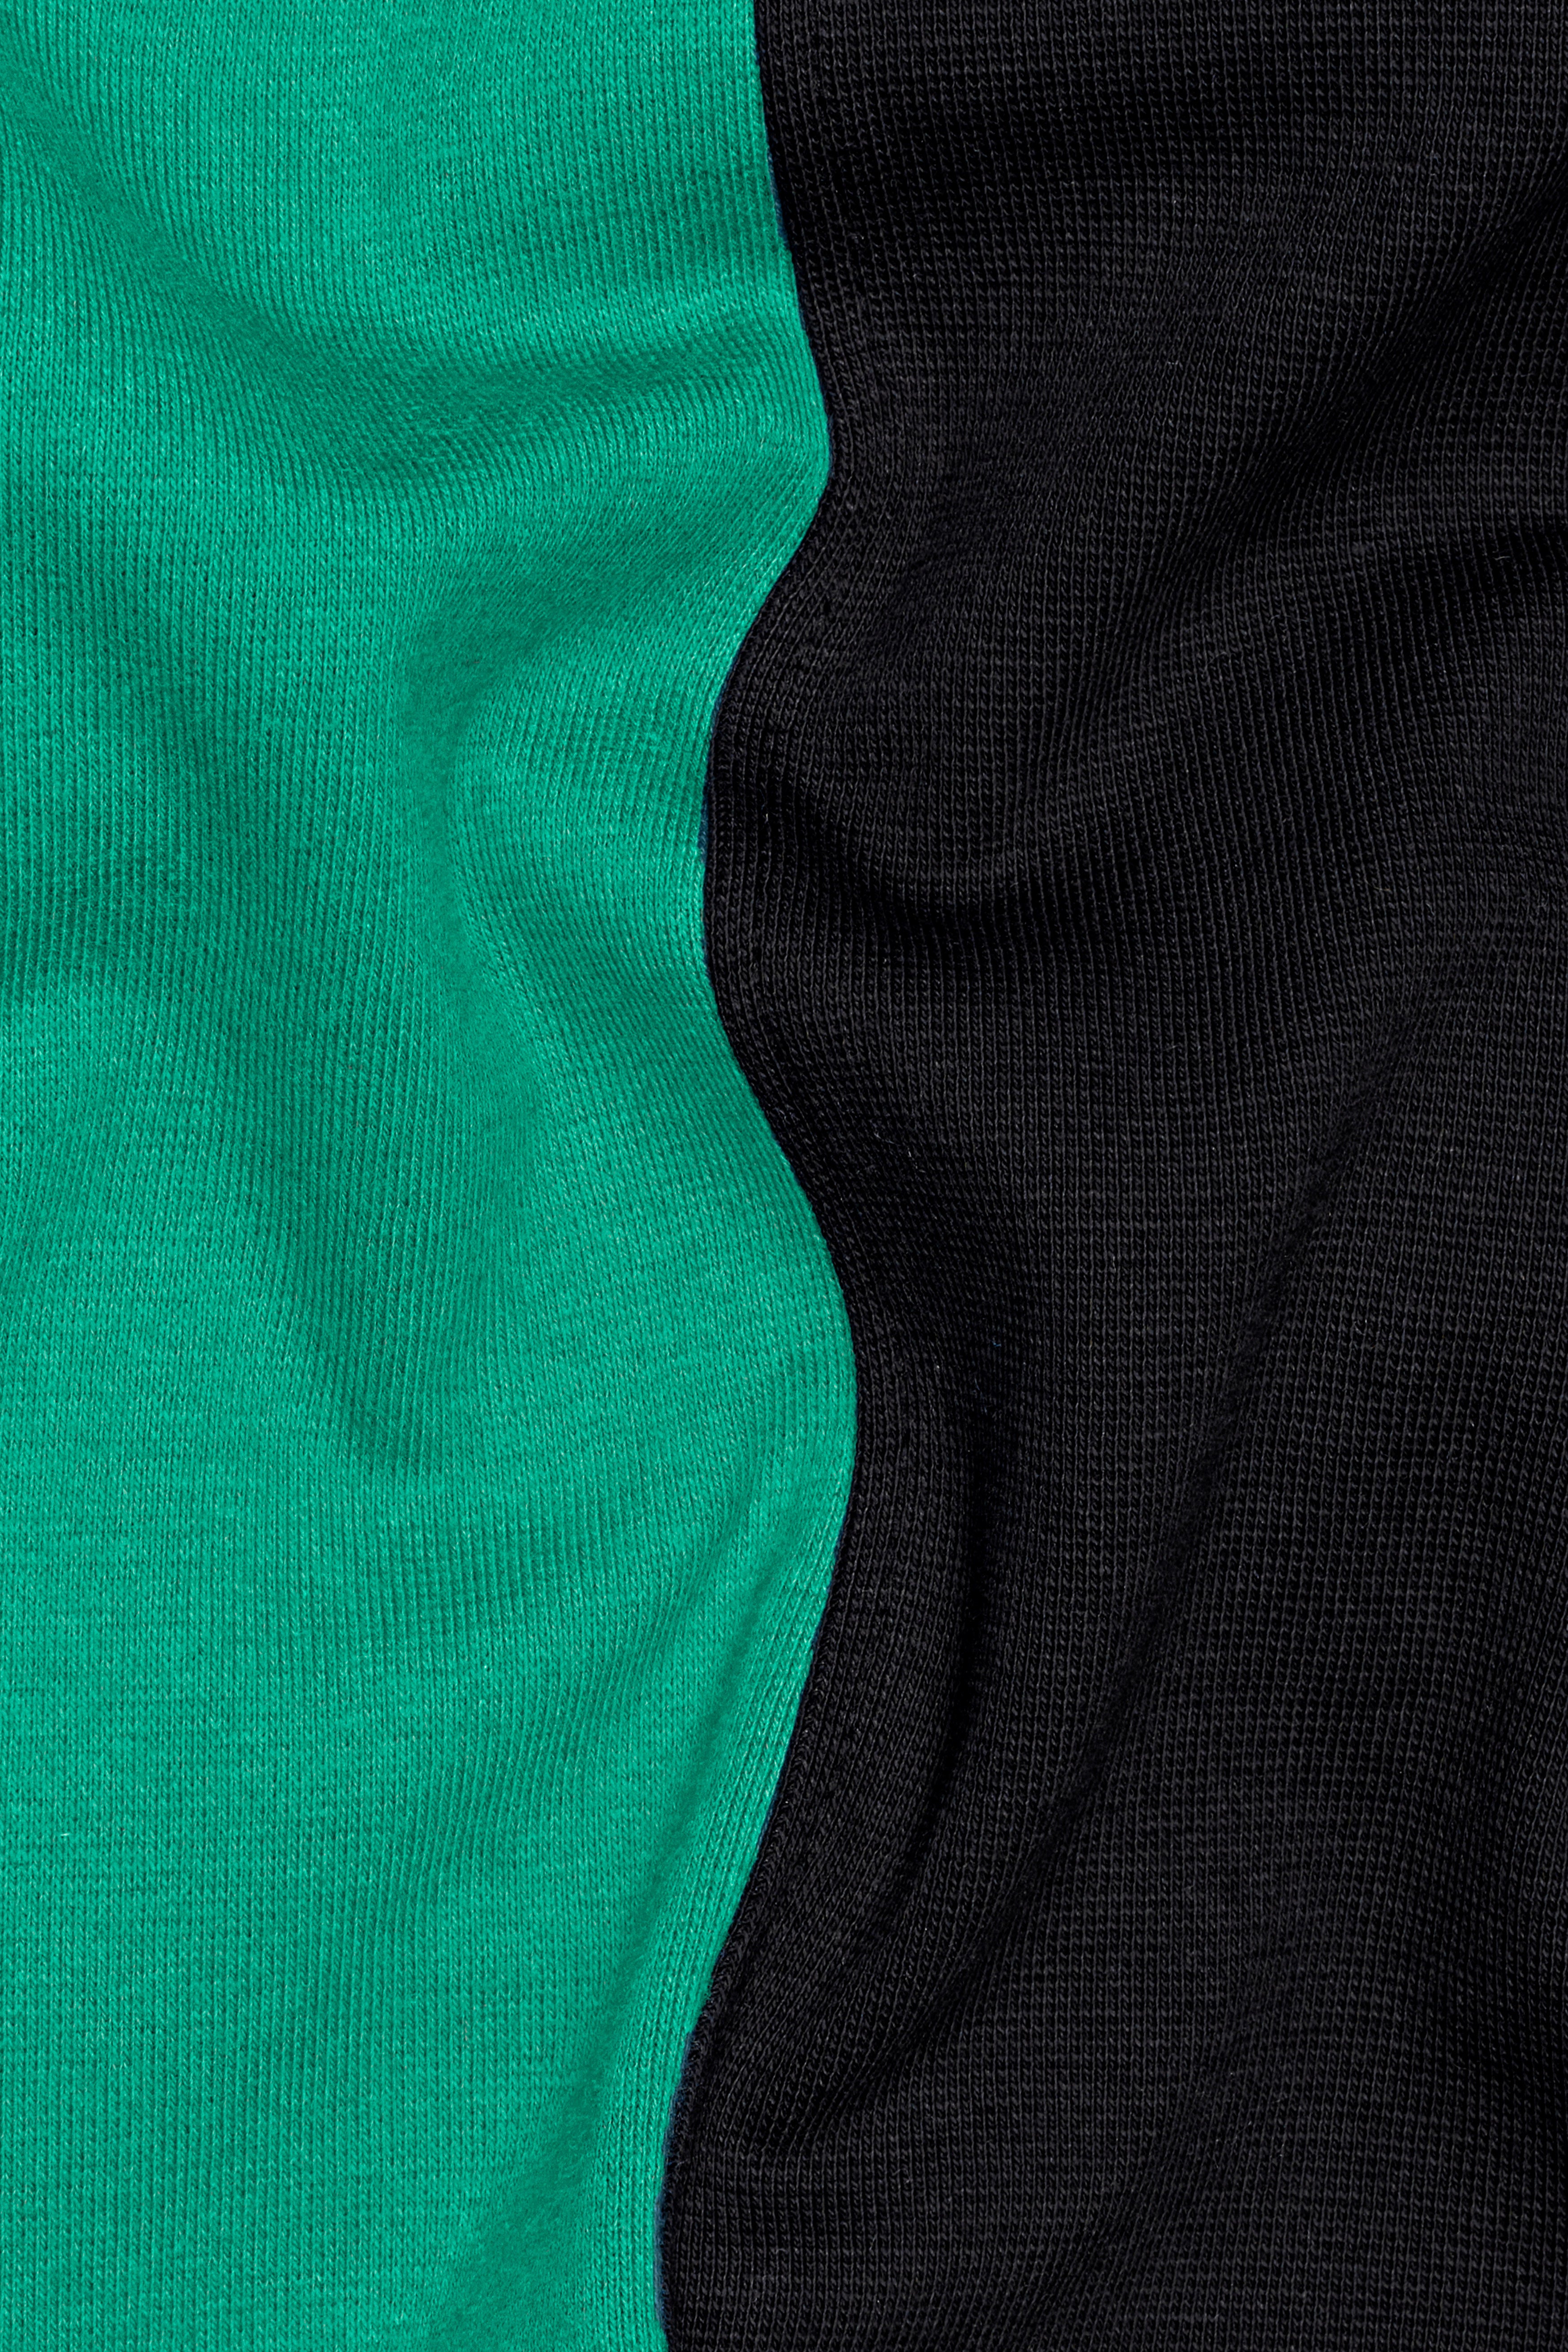 Jade Black and Mountain Meadow Green Premium Cotton Jersey T-Shirt TS909-S, TS909-M, TS909-L, TS909-XL, TS909-XXL